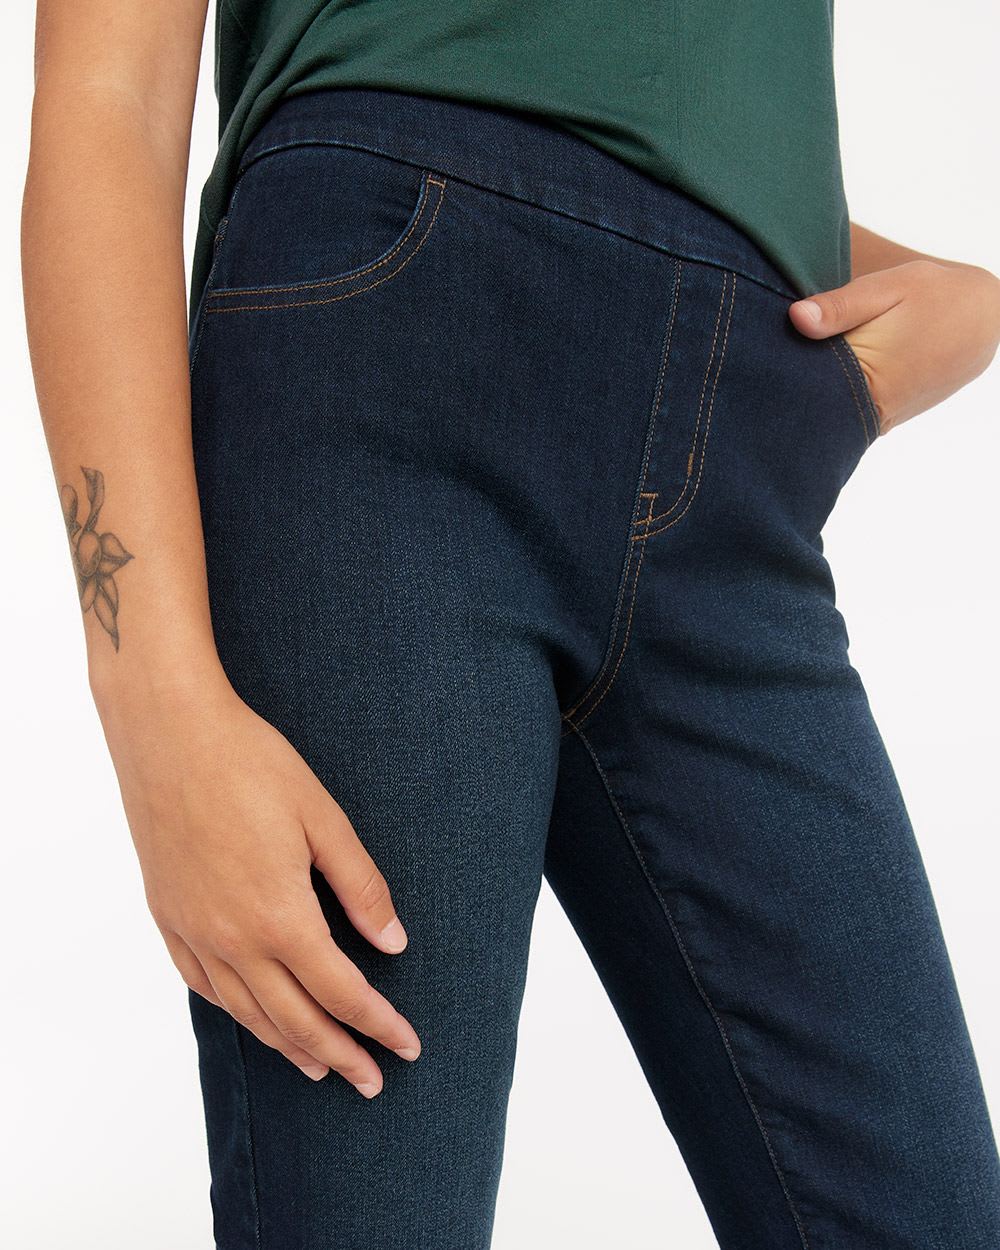 Mid-Rise Dark Wash Jeans with Straight Leg, The Original Comfort - Petite